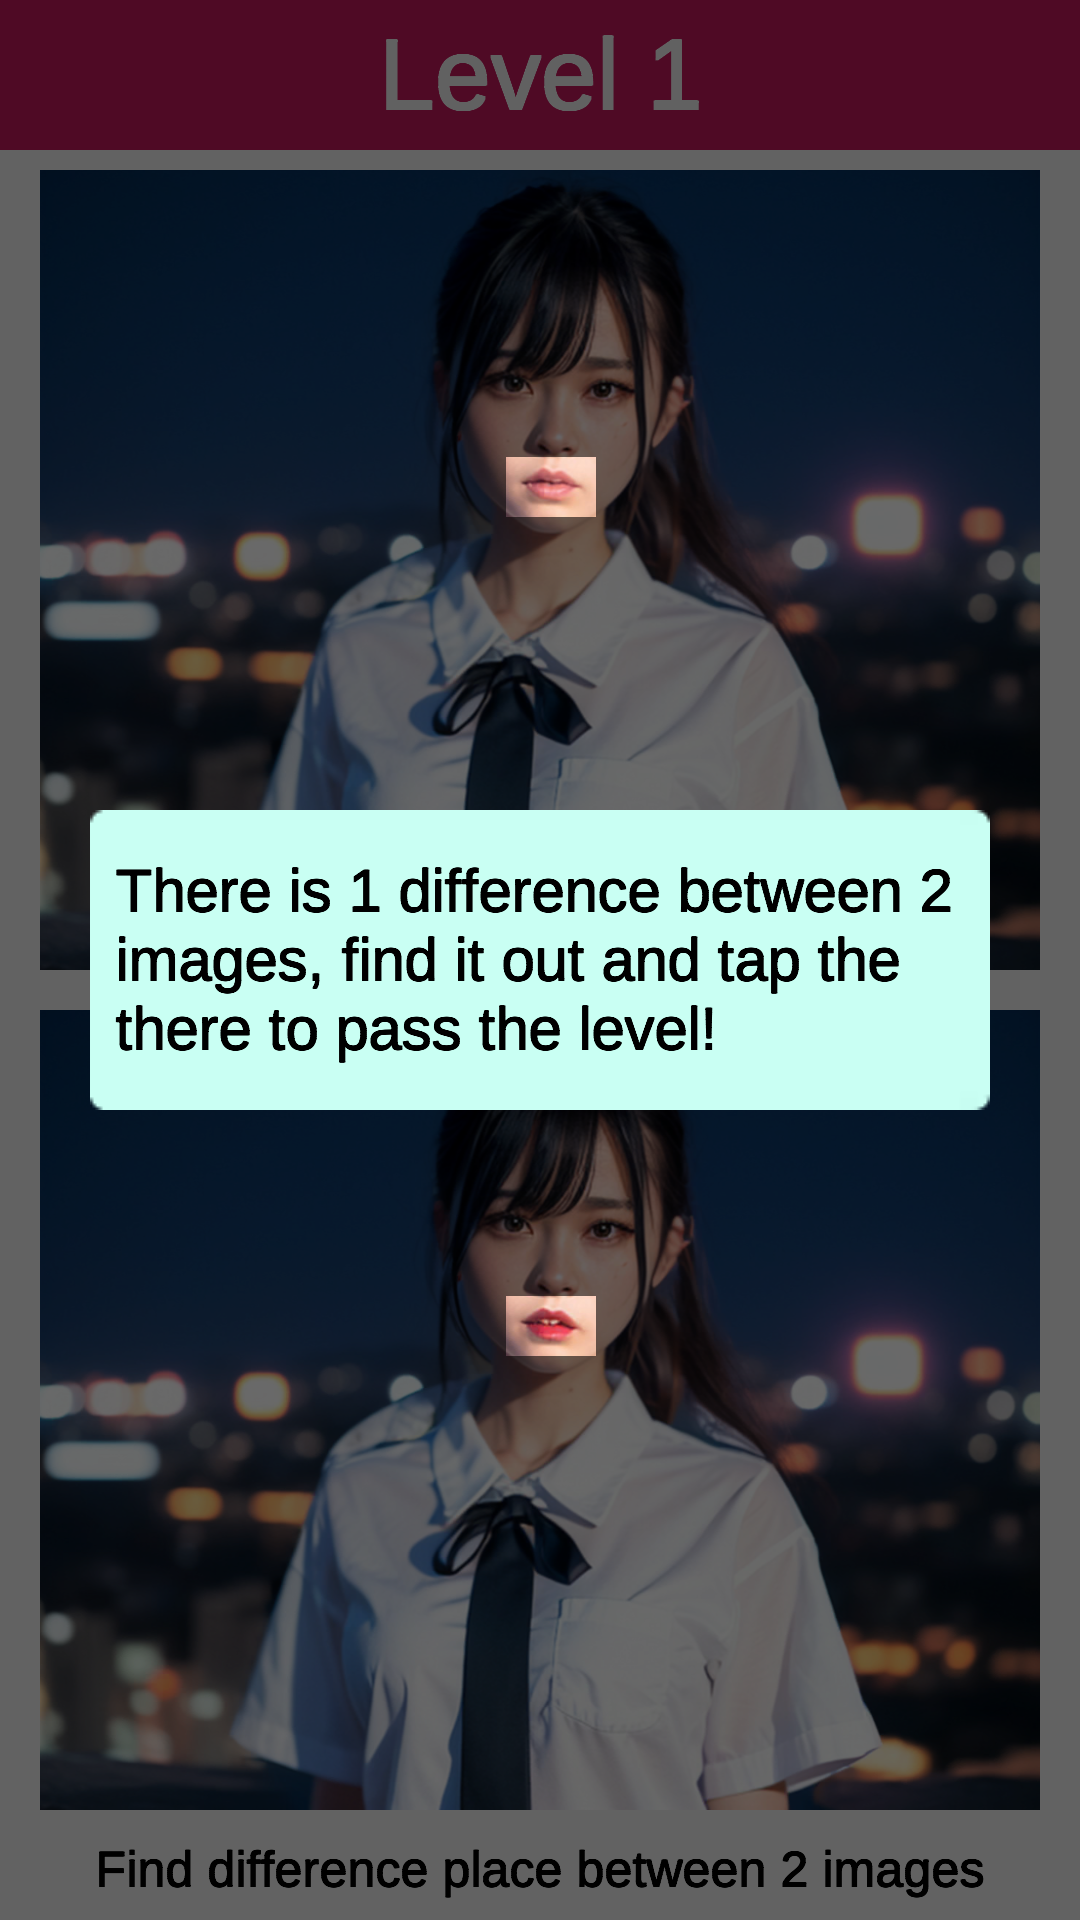 Screenshot 1 of AI 소녀: 차이점 찾기 1.15